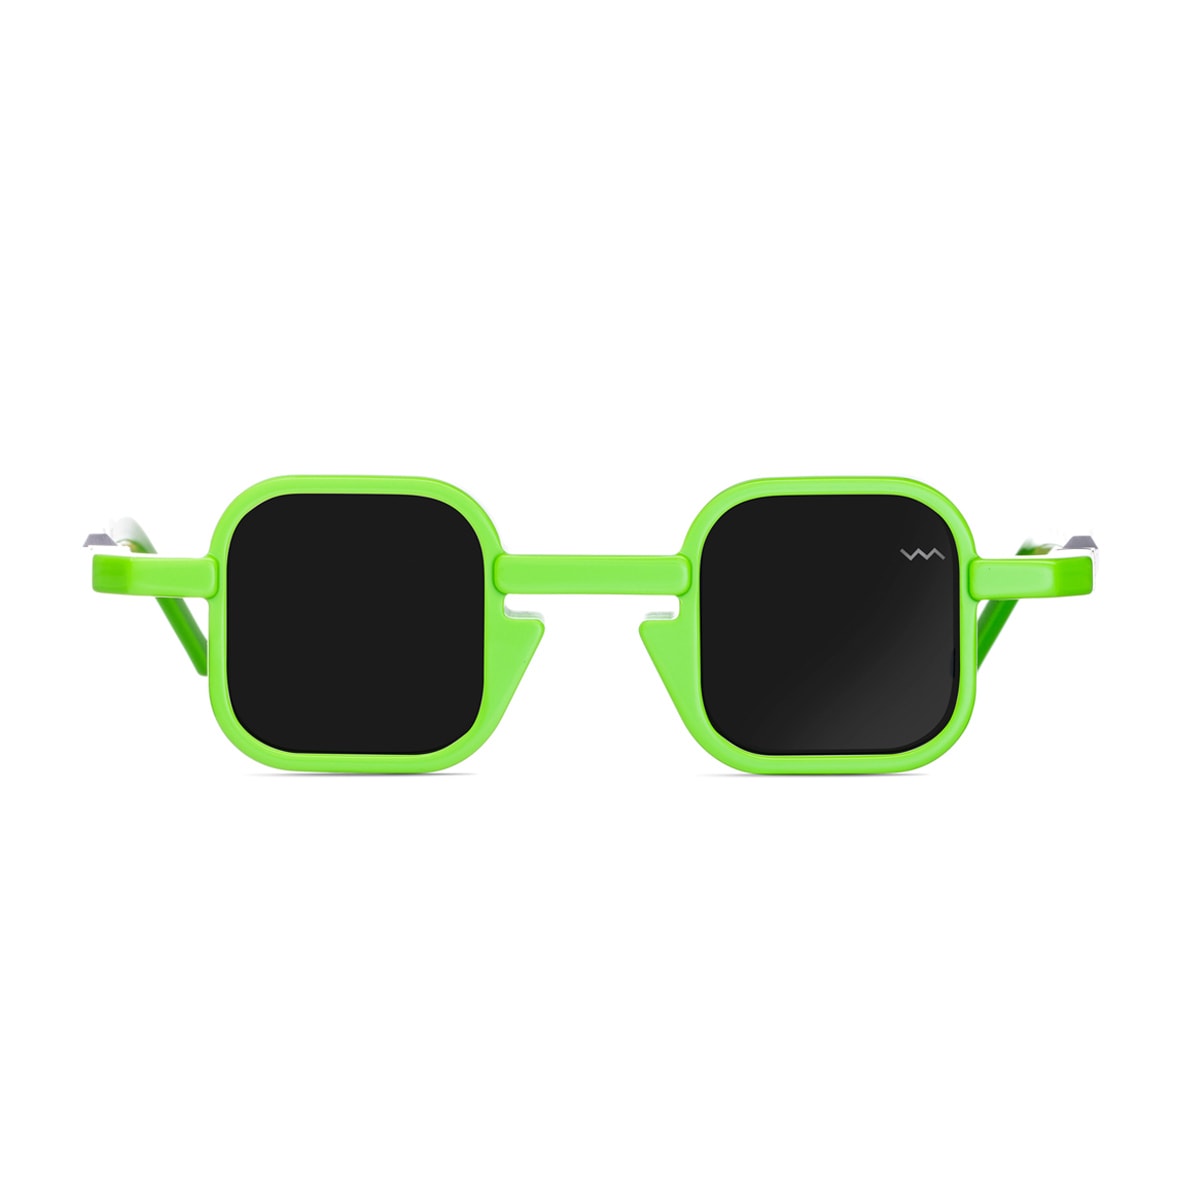 Wl0067 White Label Acid Green Sunglasses